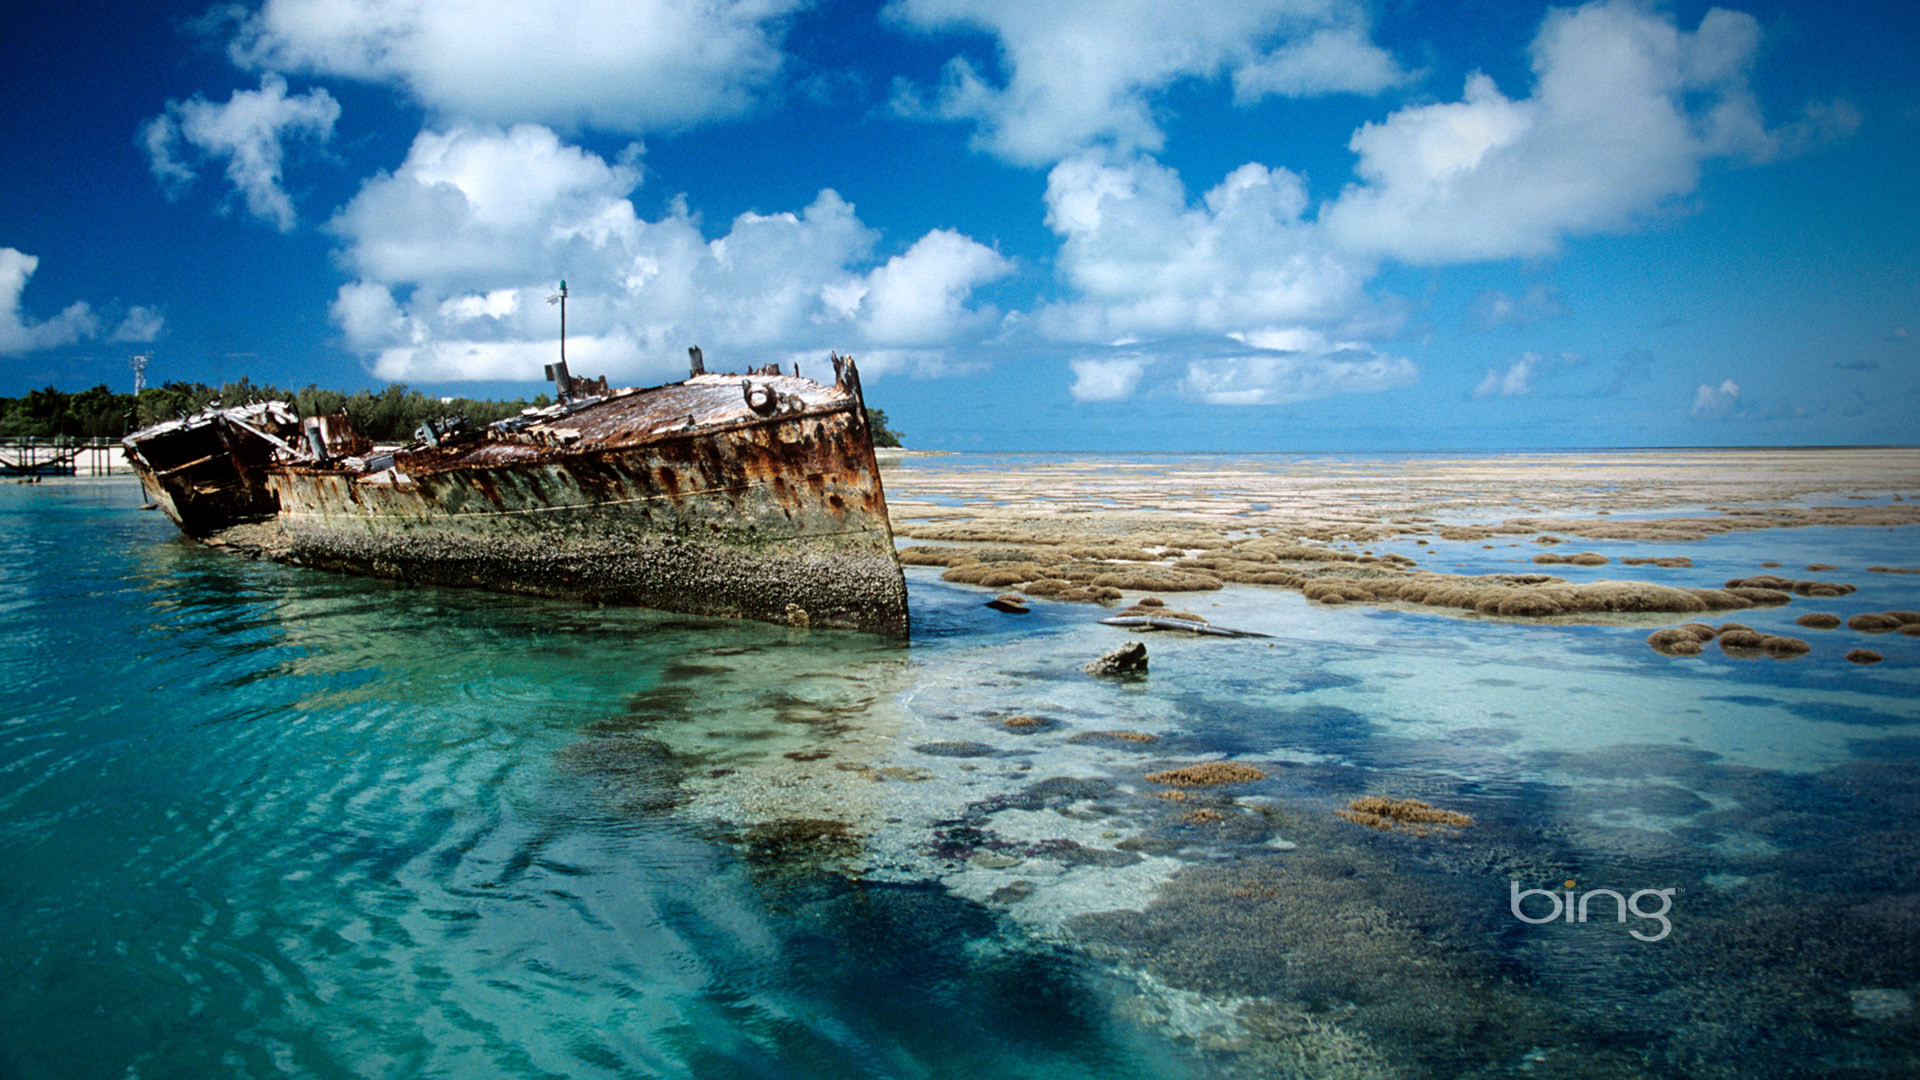 1920x1080 Bing Shipwreck on Heron Island desktop background Australia full hd.